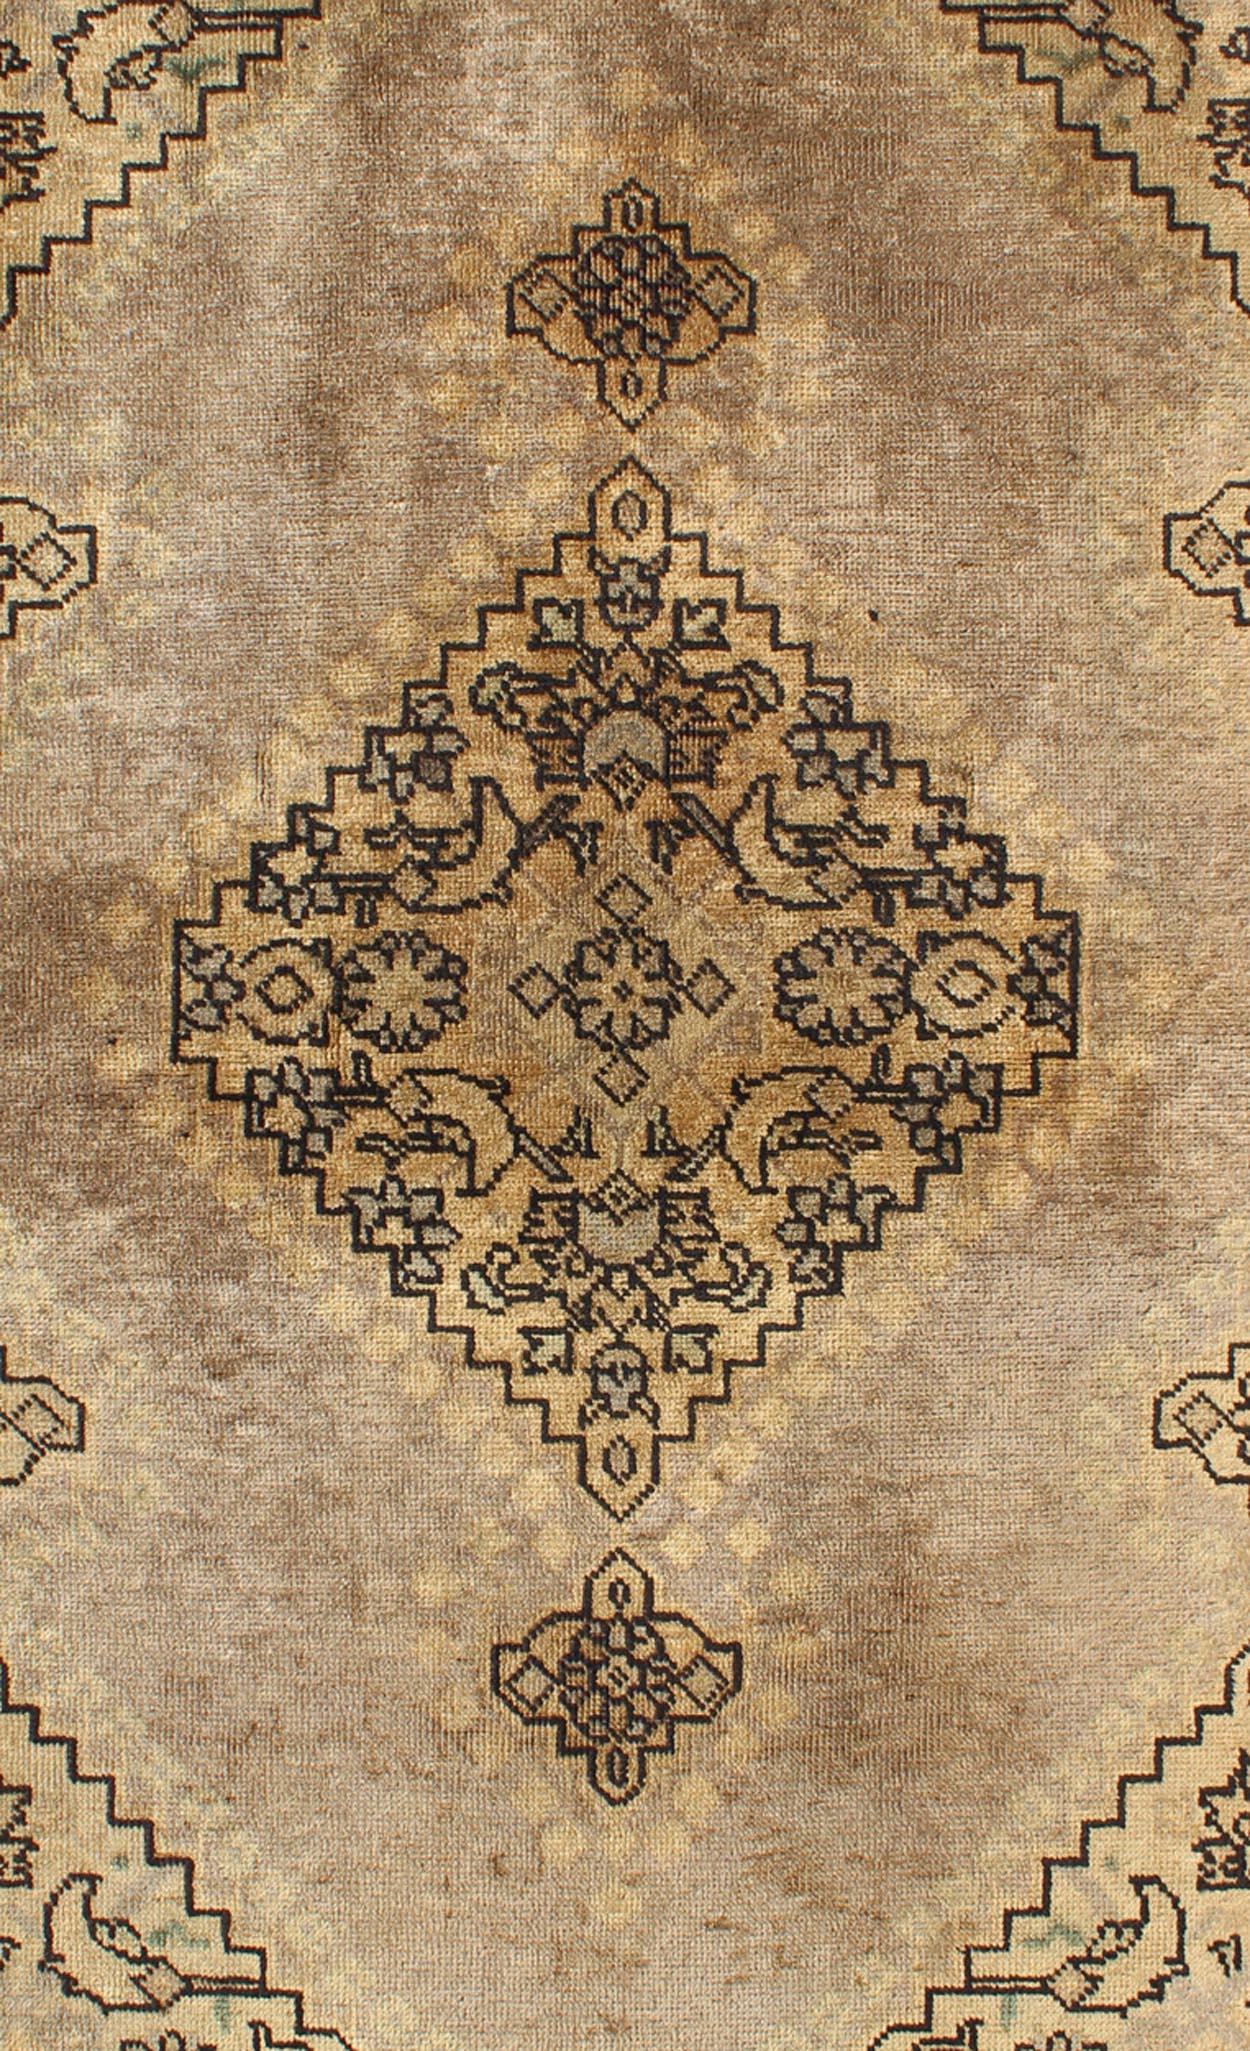 Medallion style Tabriz Persian vintage rug with swirling garden pattern. Keivan Woven Arts / rug H-102-39, country of origin / type: Iran / Tabriz, circa 1950
Measures: 3'3 x 5'0.
This spectacular Persian Tabriz bears a magnificent splendor